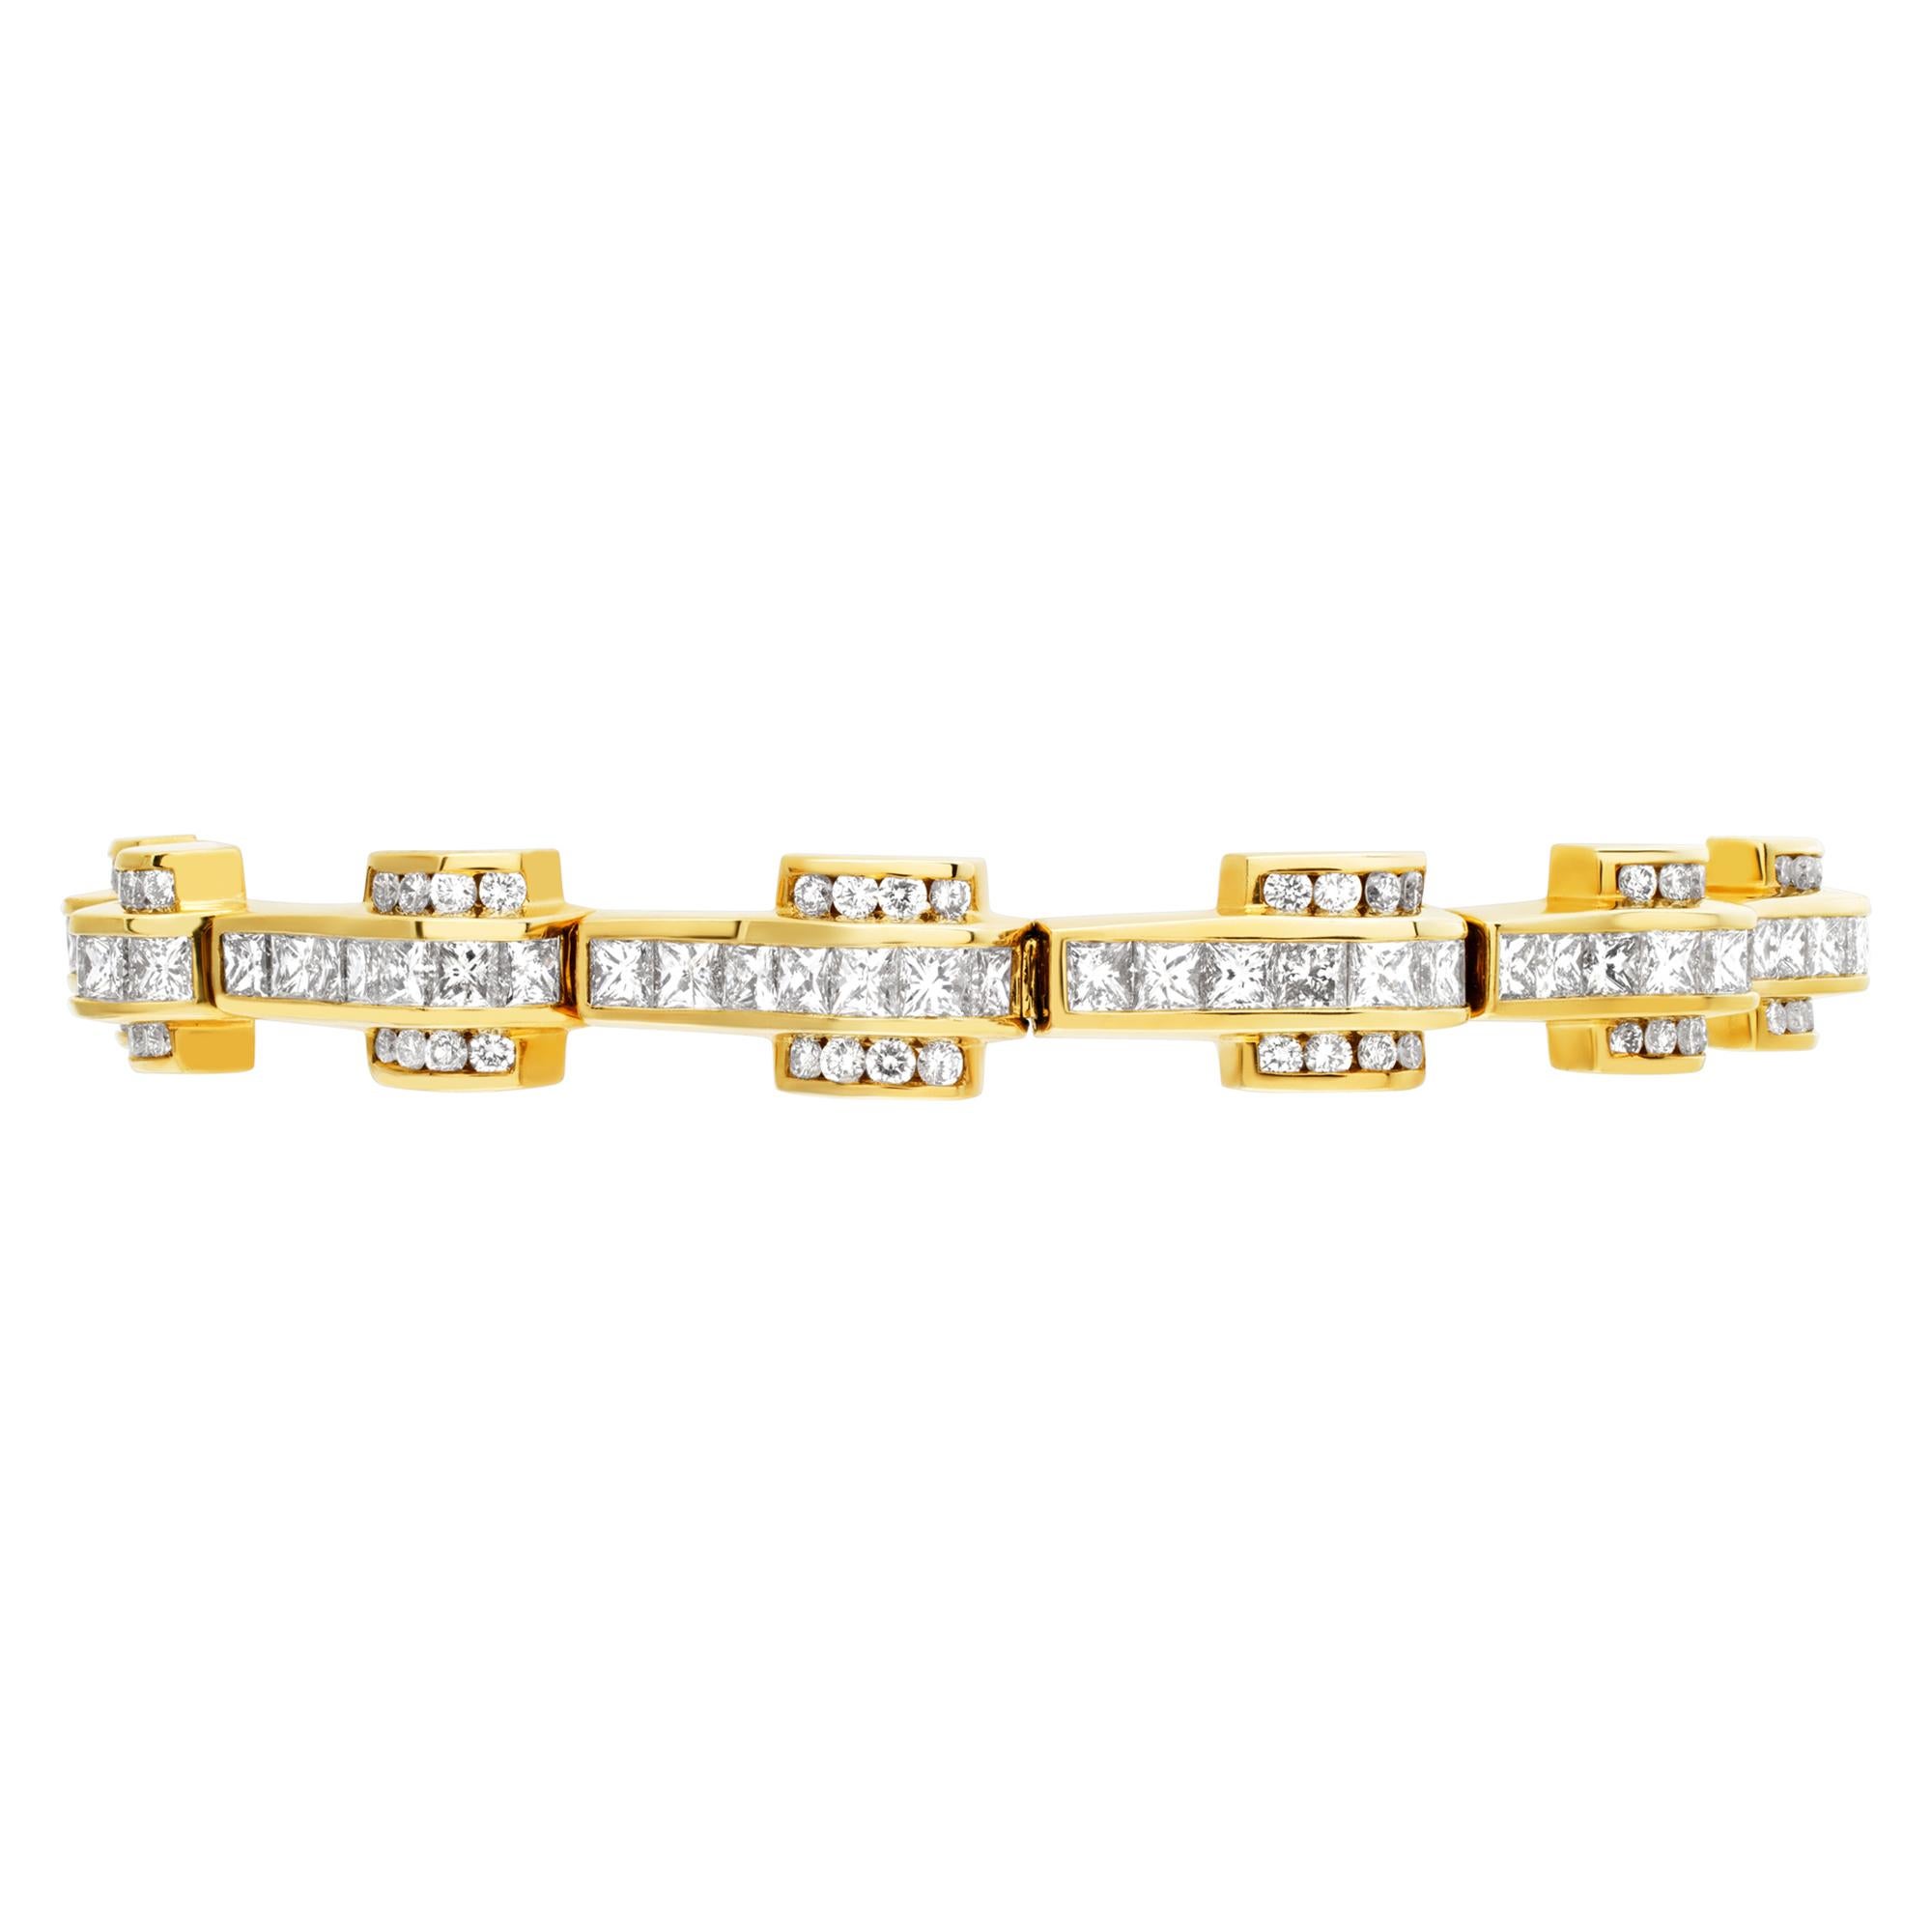 Stylish link & diamonds 14k yellow gold bracelet with over 8.25 carats princess and full cut round brilliant diamonds, estimate: G-H color, VS-SI clarity. Bracelet length: 7.1/4